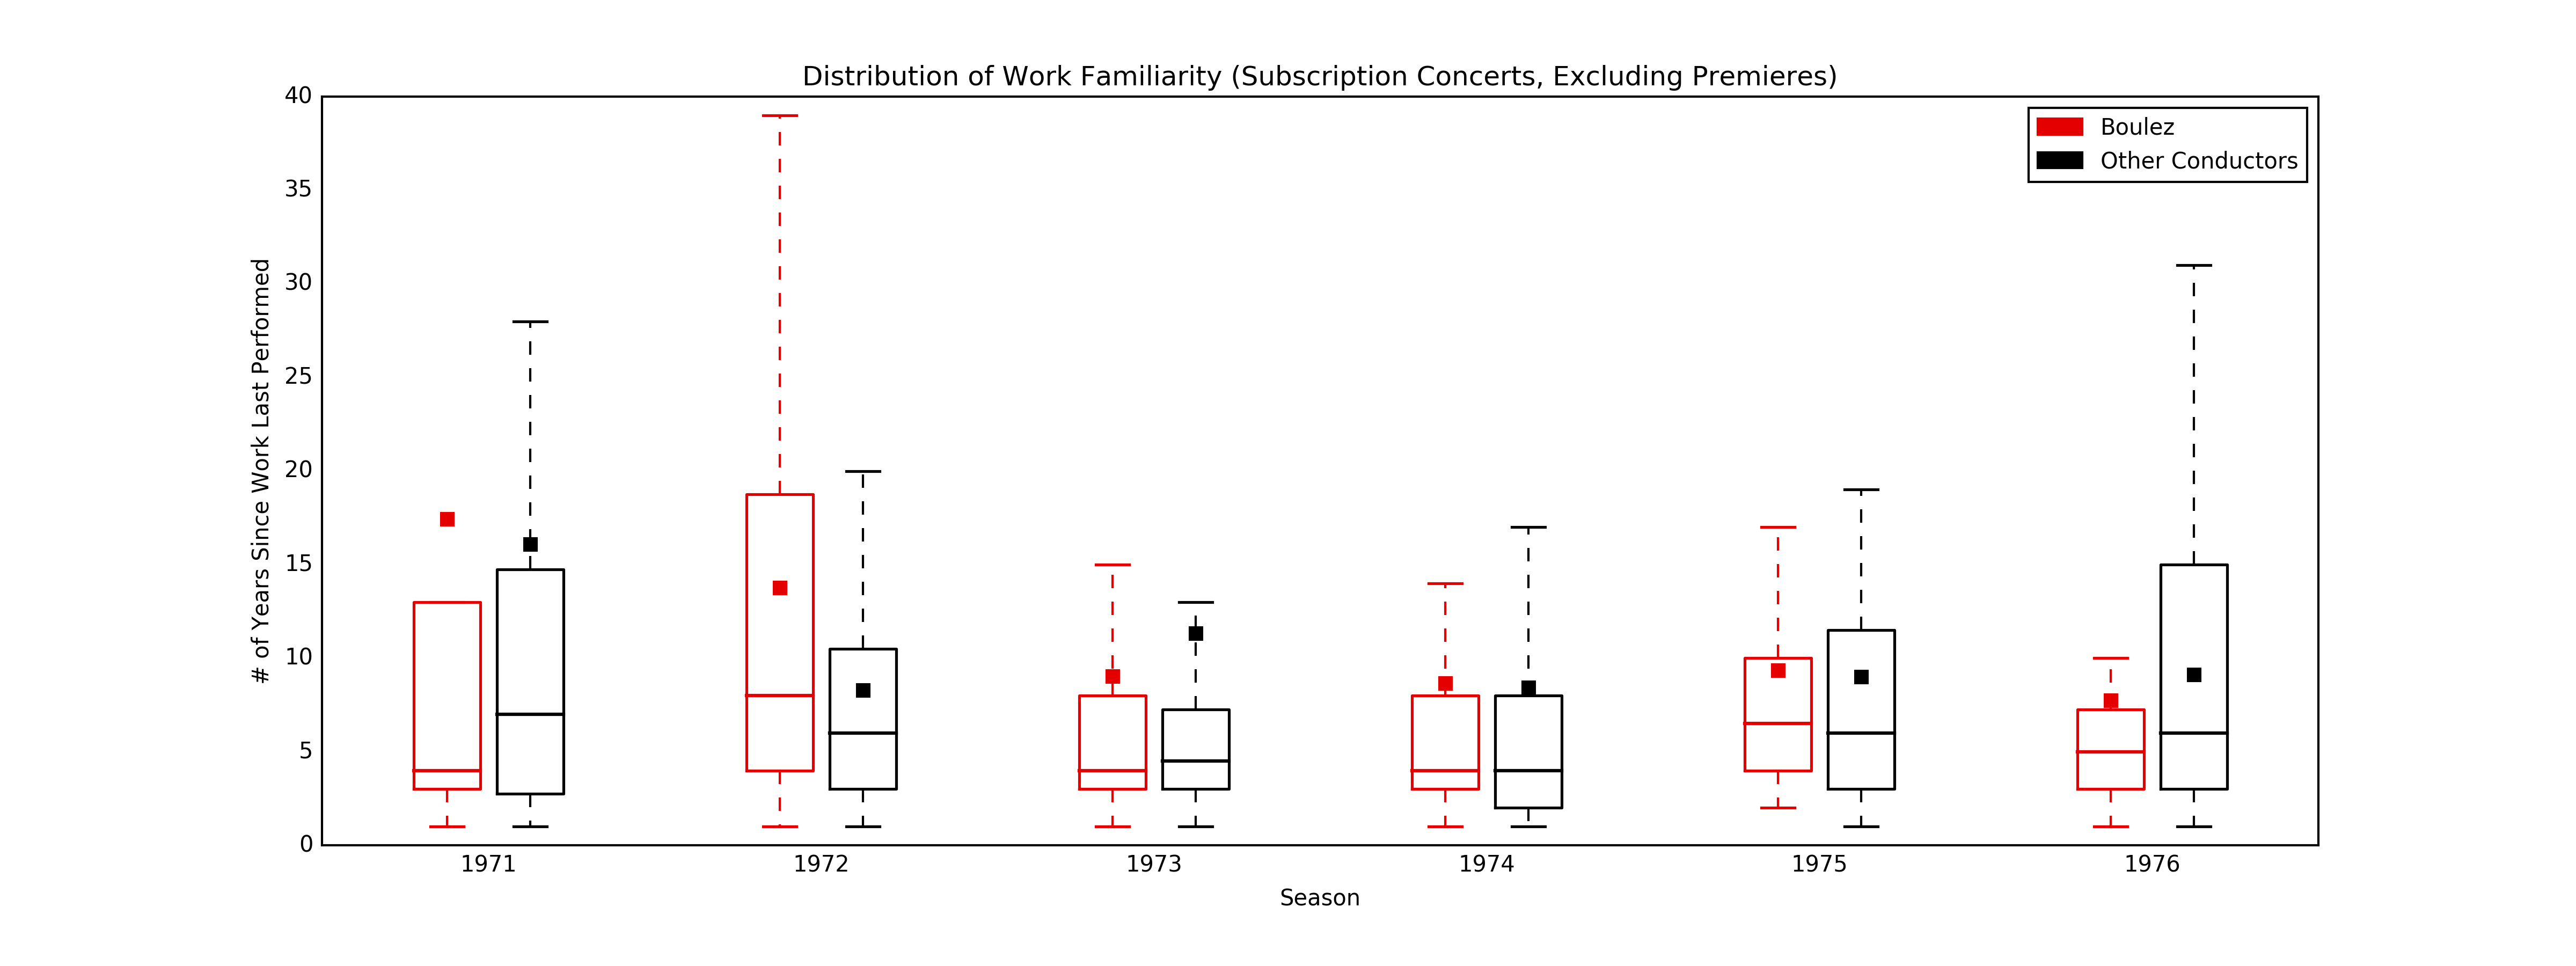 Work Familiarity: Boulez vs. Other